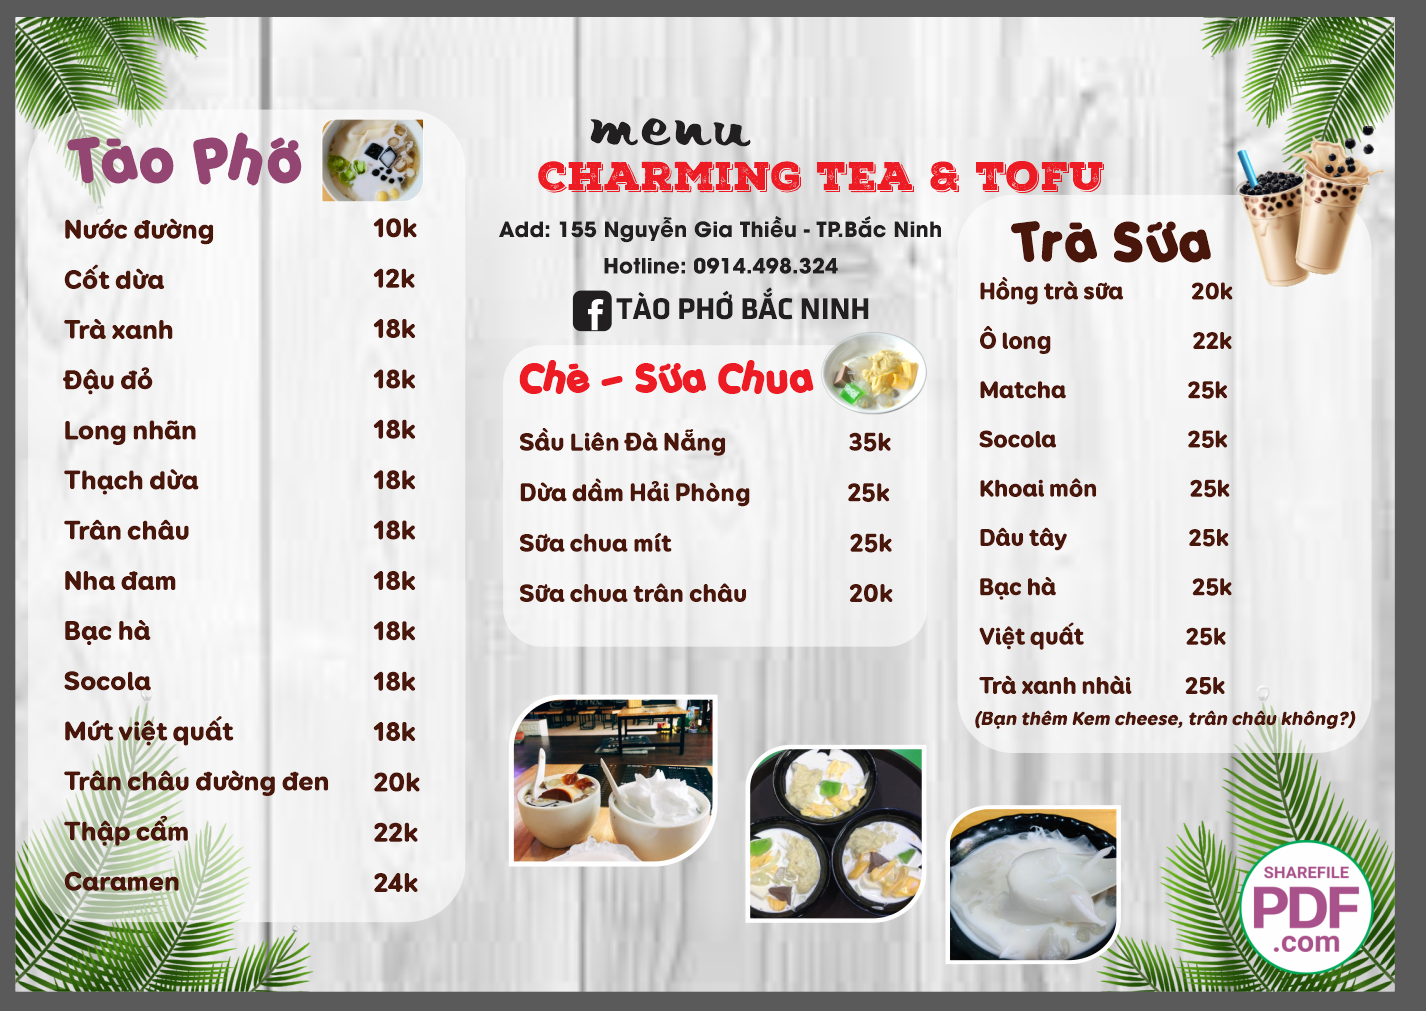 menu charming tea va tofu - tao pho.png